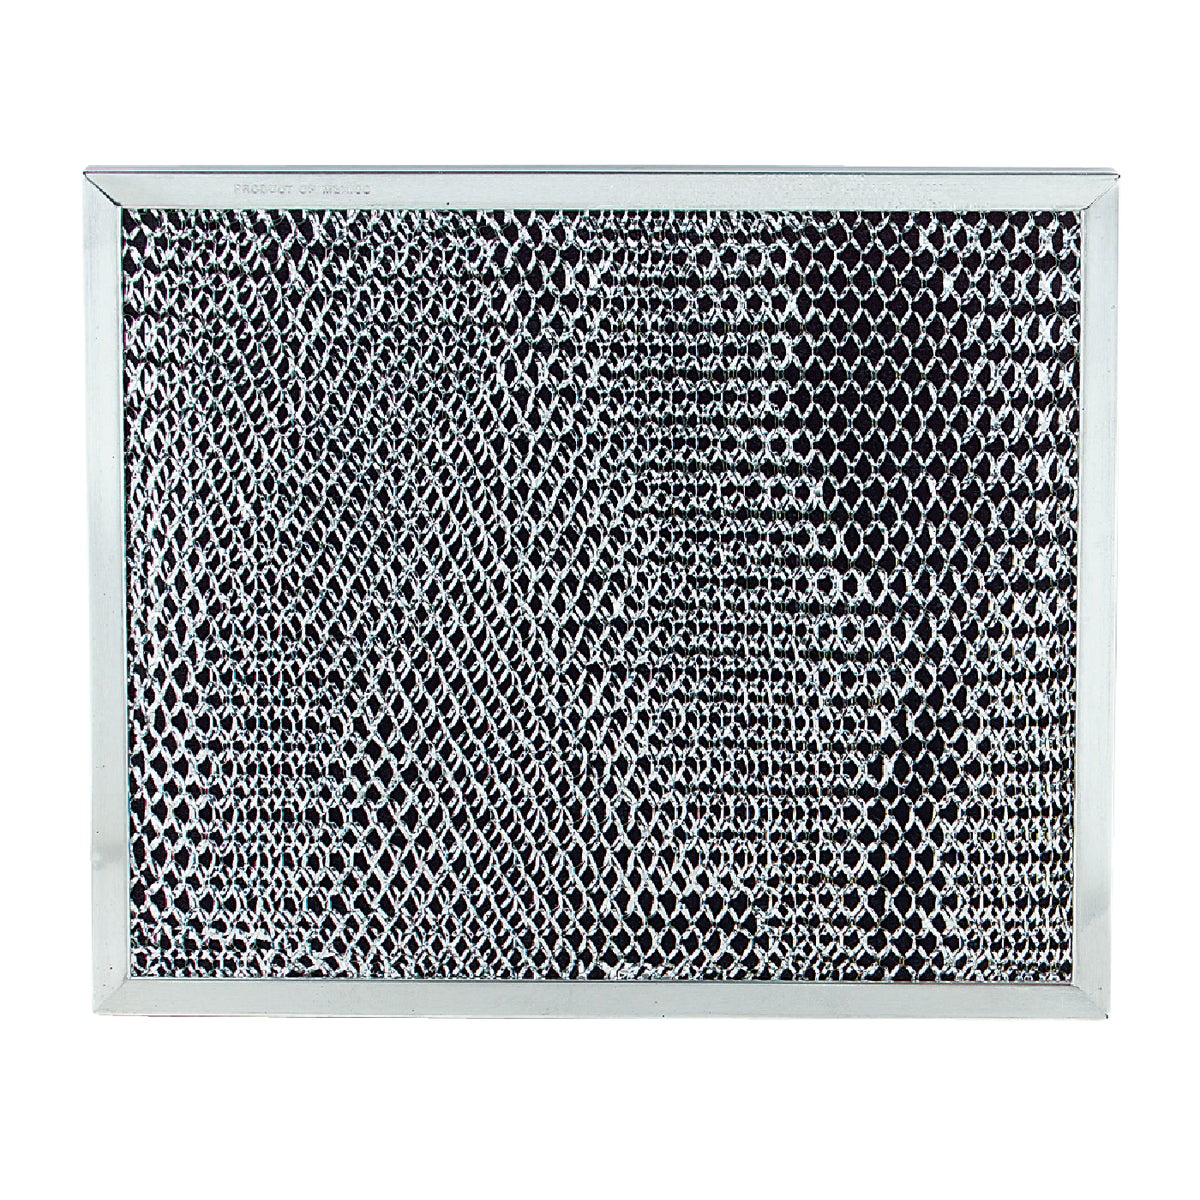 Broan-Nutone Microtek 413 Series Non-Ducted Charcoal Range Hood Filter